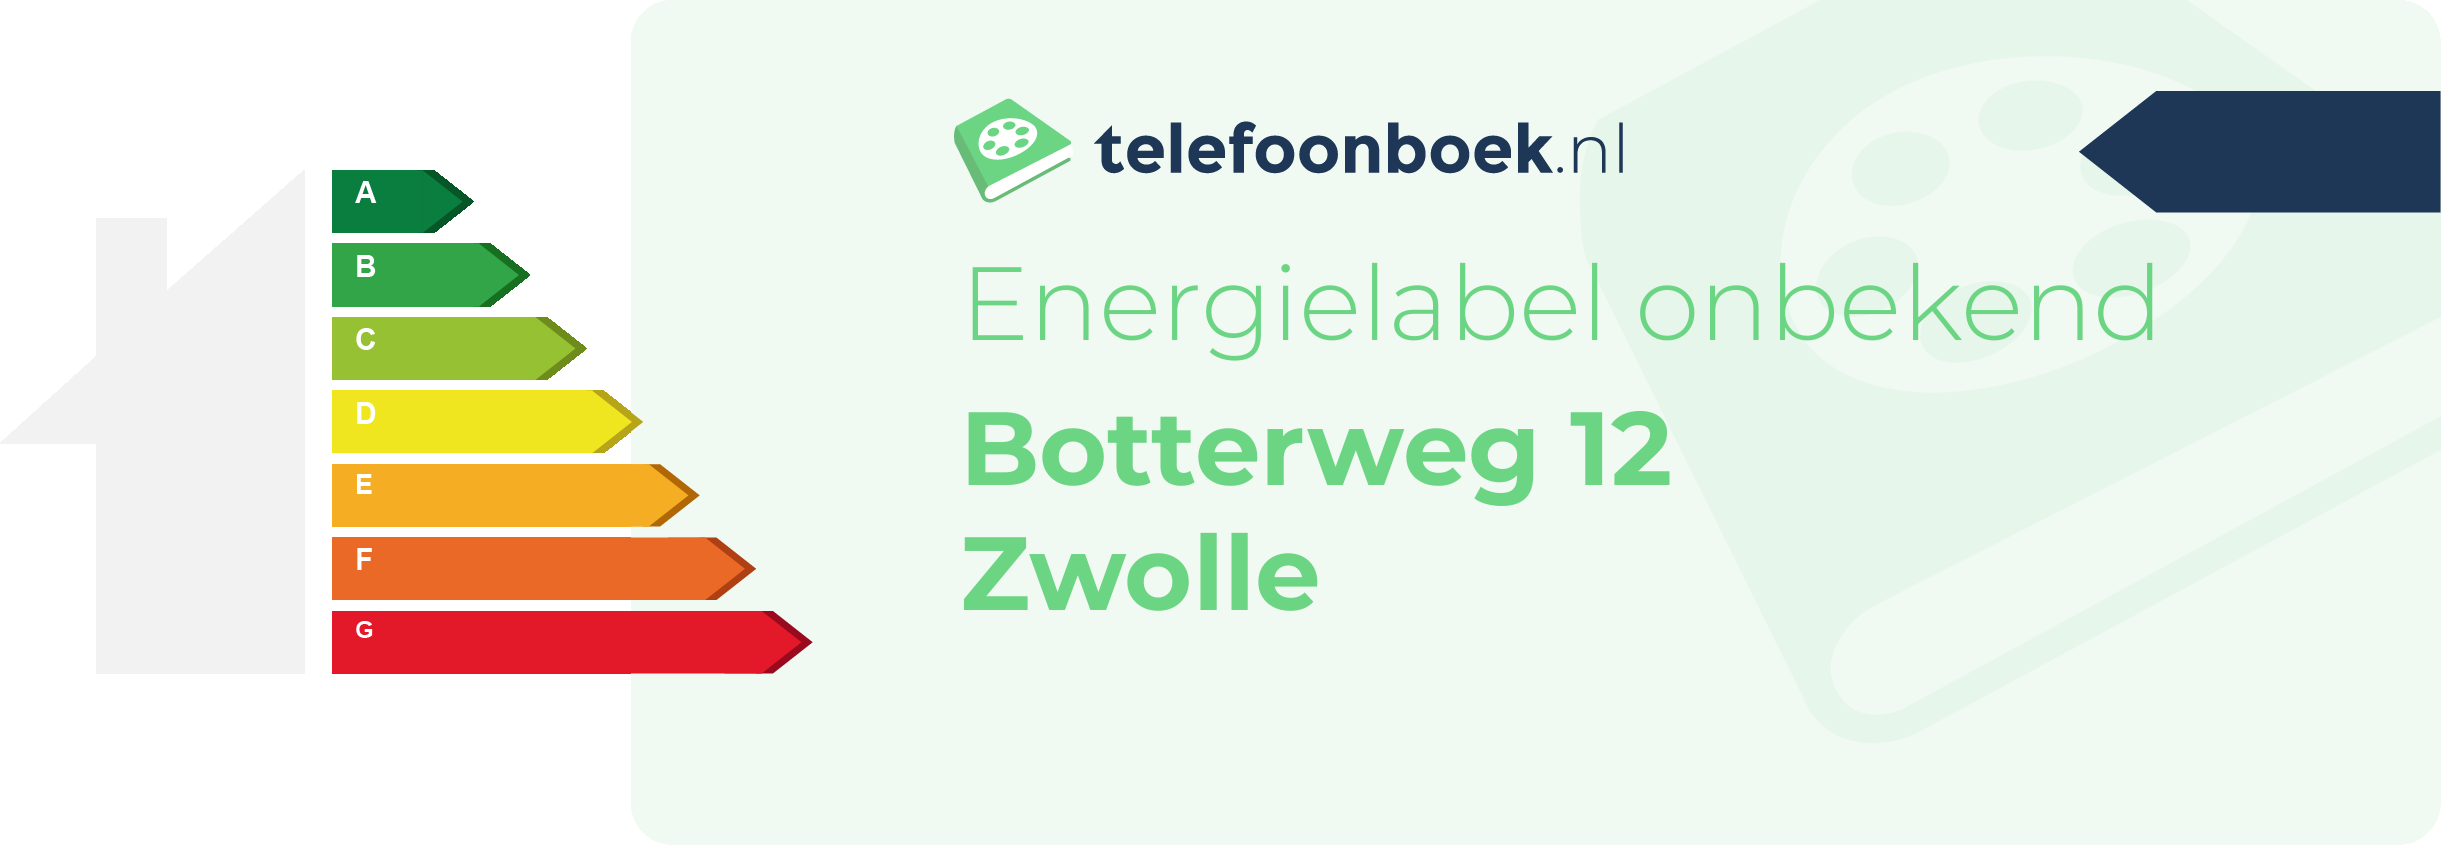 Energielabel Botterweg 12 Zwolle